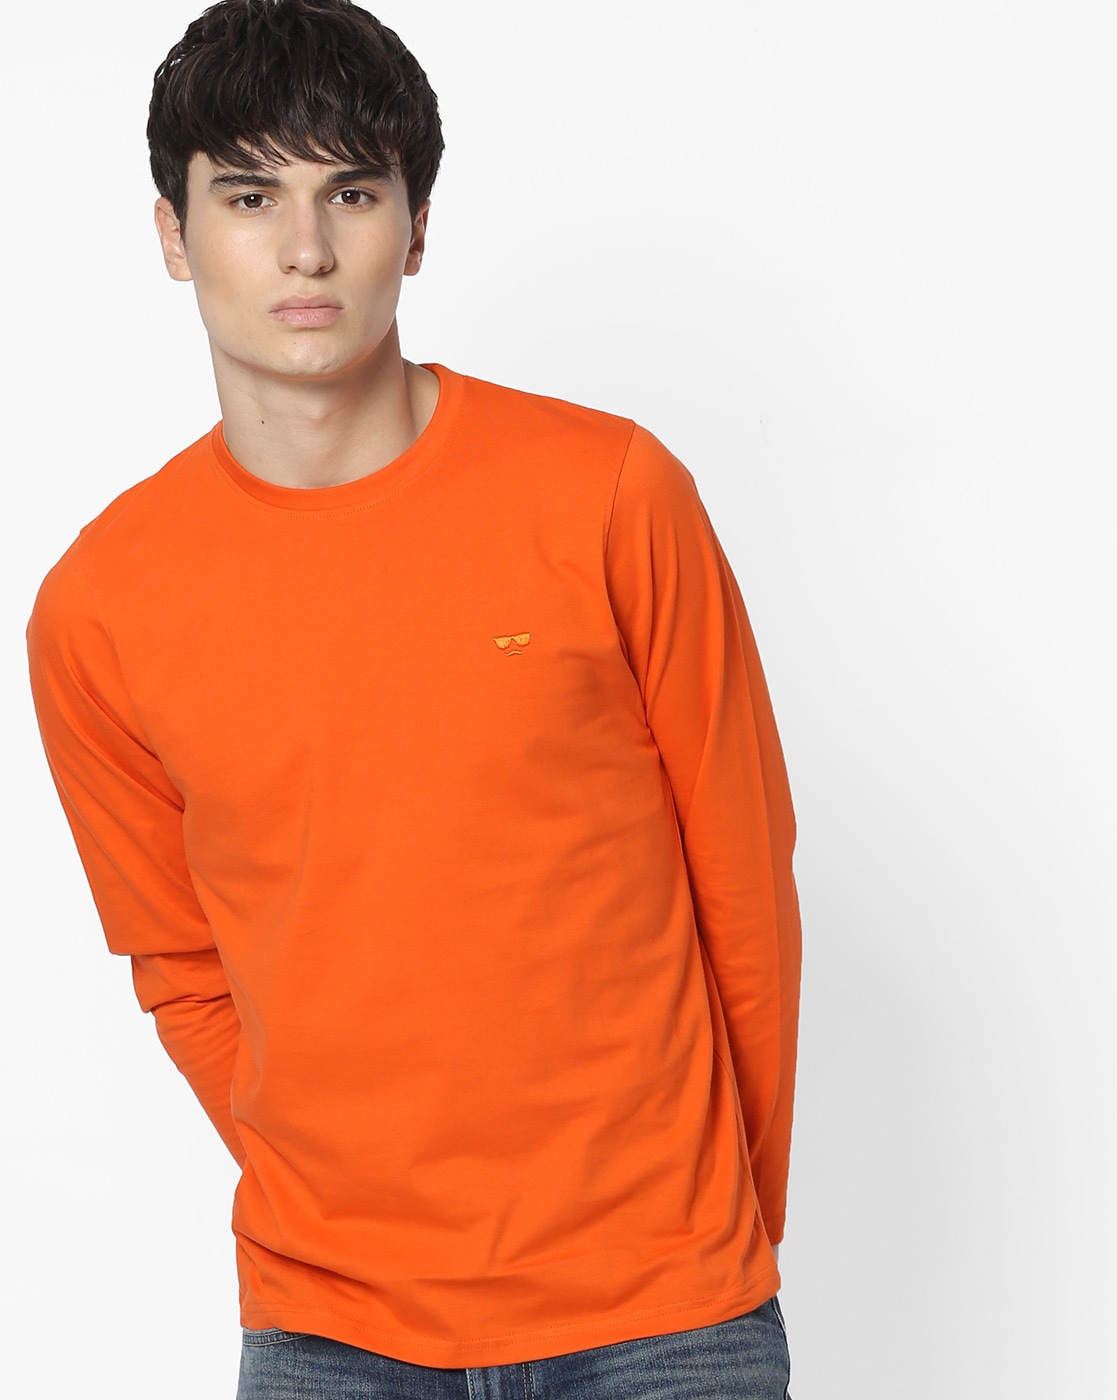 Buy Orange Tshirts for Men by Garcon Online